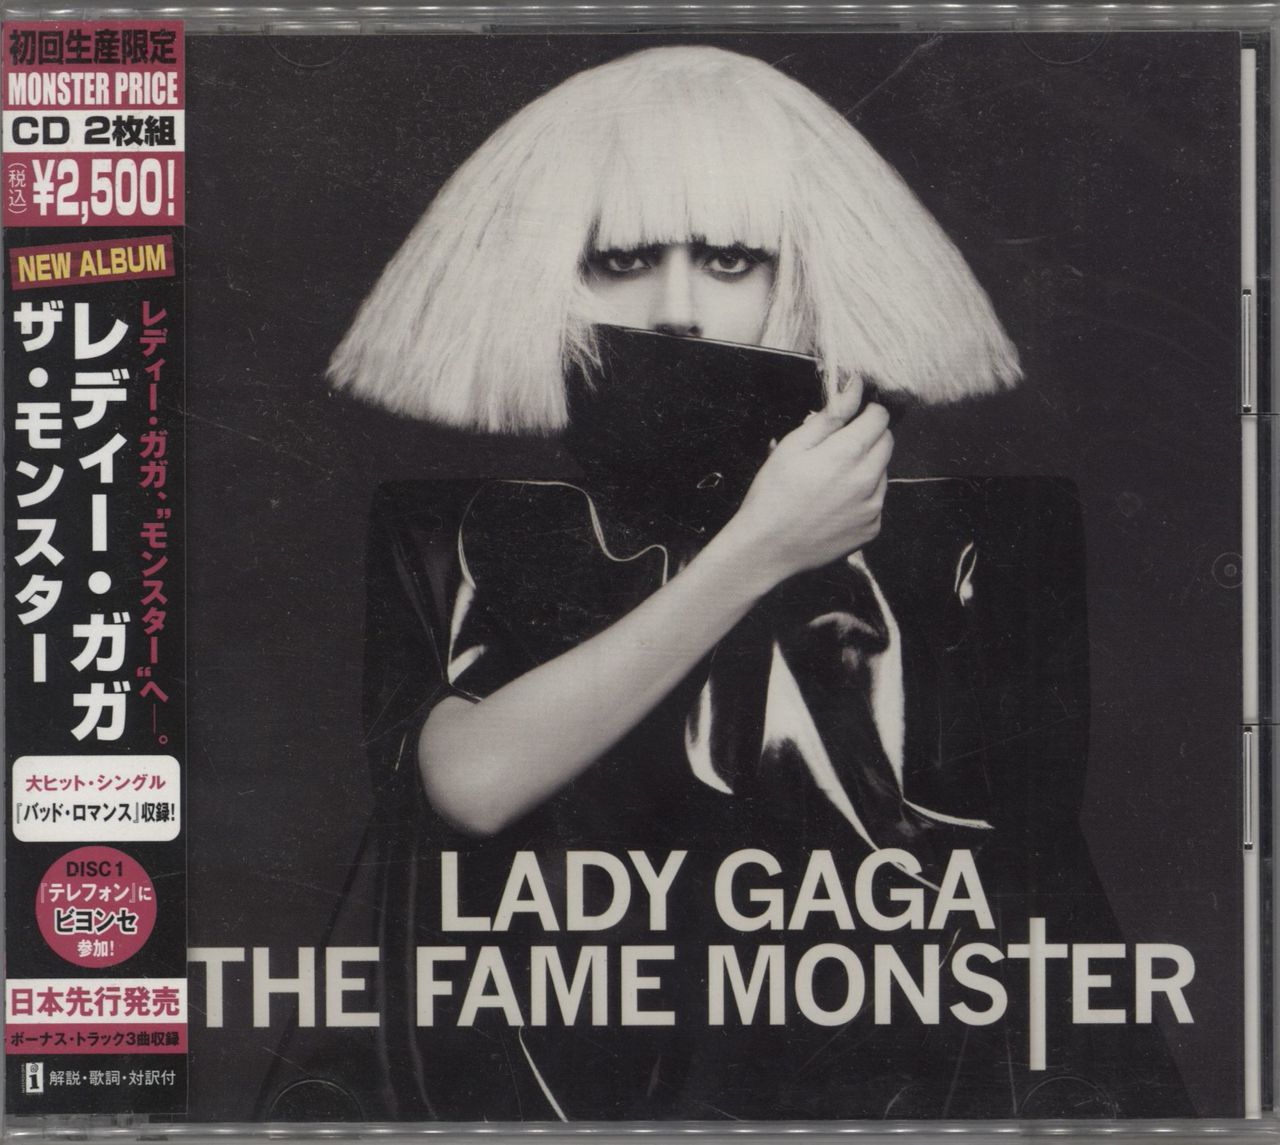 Lady Gaga The Fame Monster Japanese Promo 2 CD album set (Double CD) UICS-9113/4